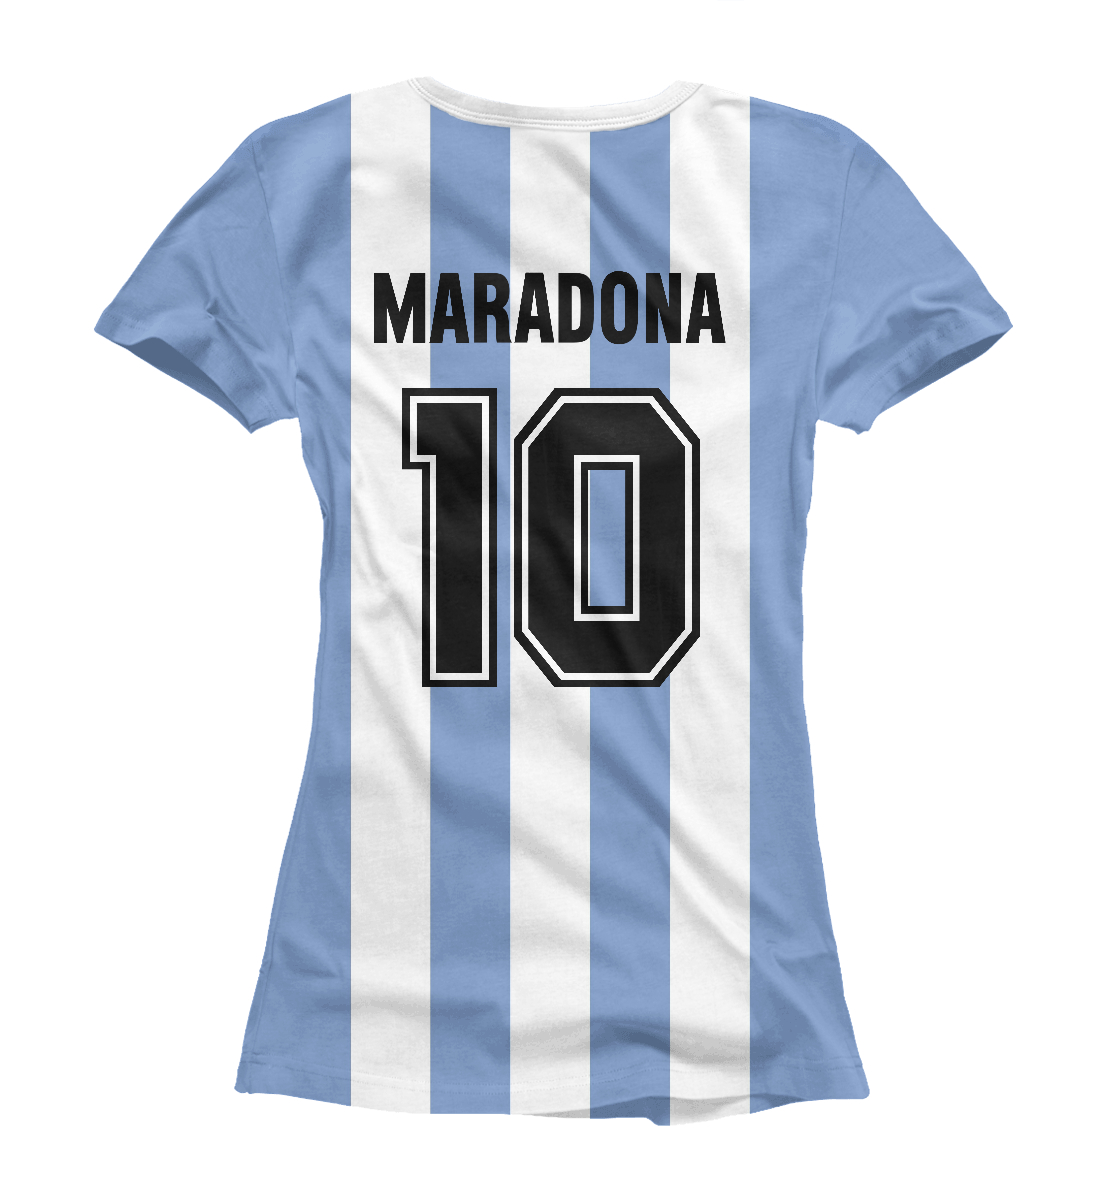 Женская Футболка Maradona, артикул SAN-232235-fut-1mp - фото 2